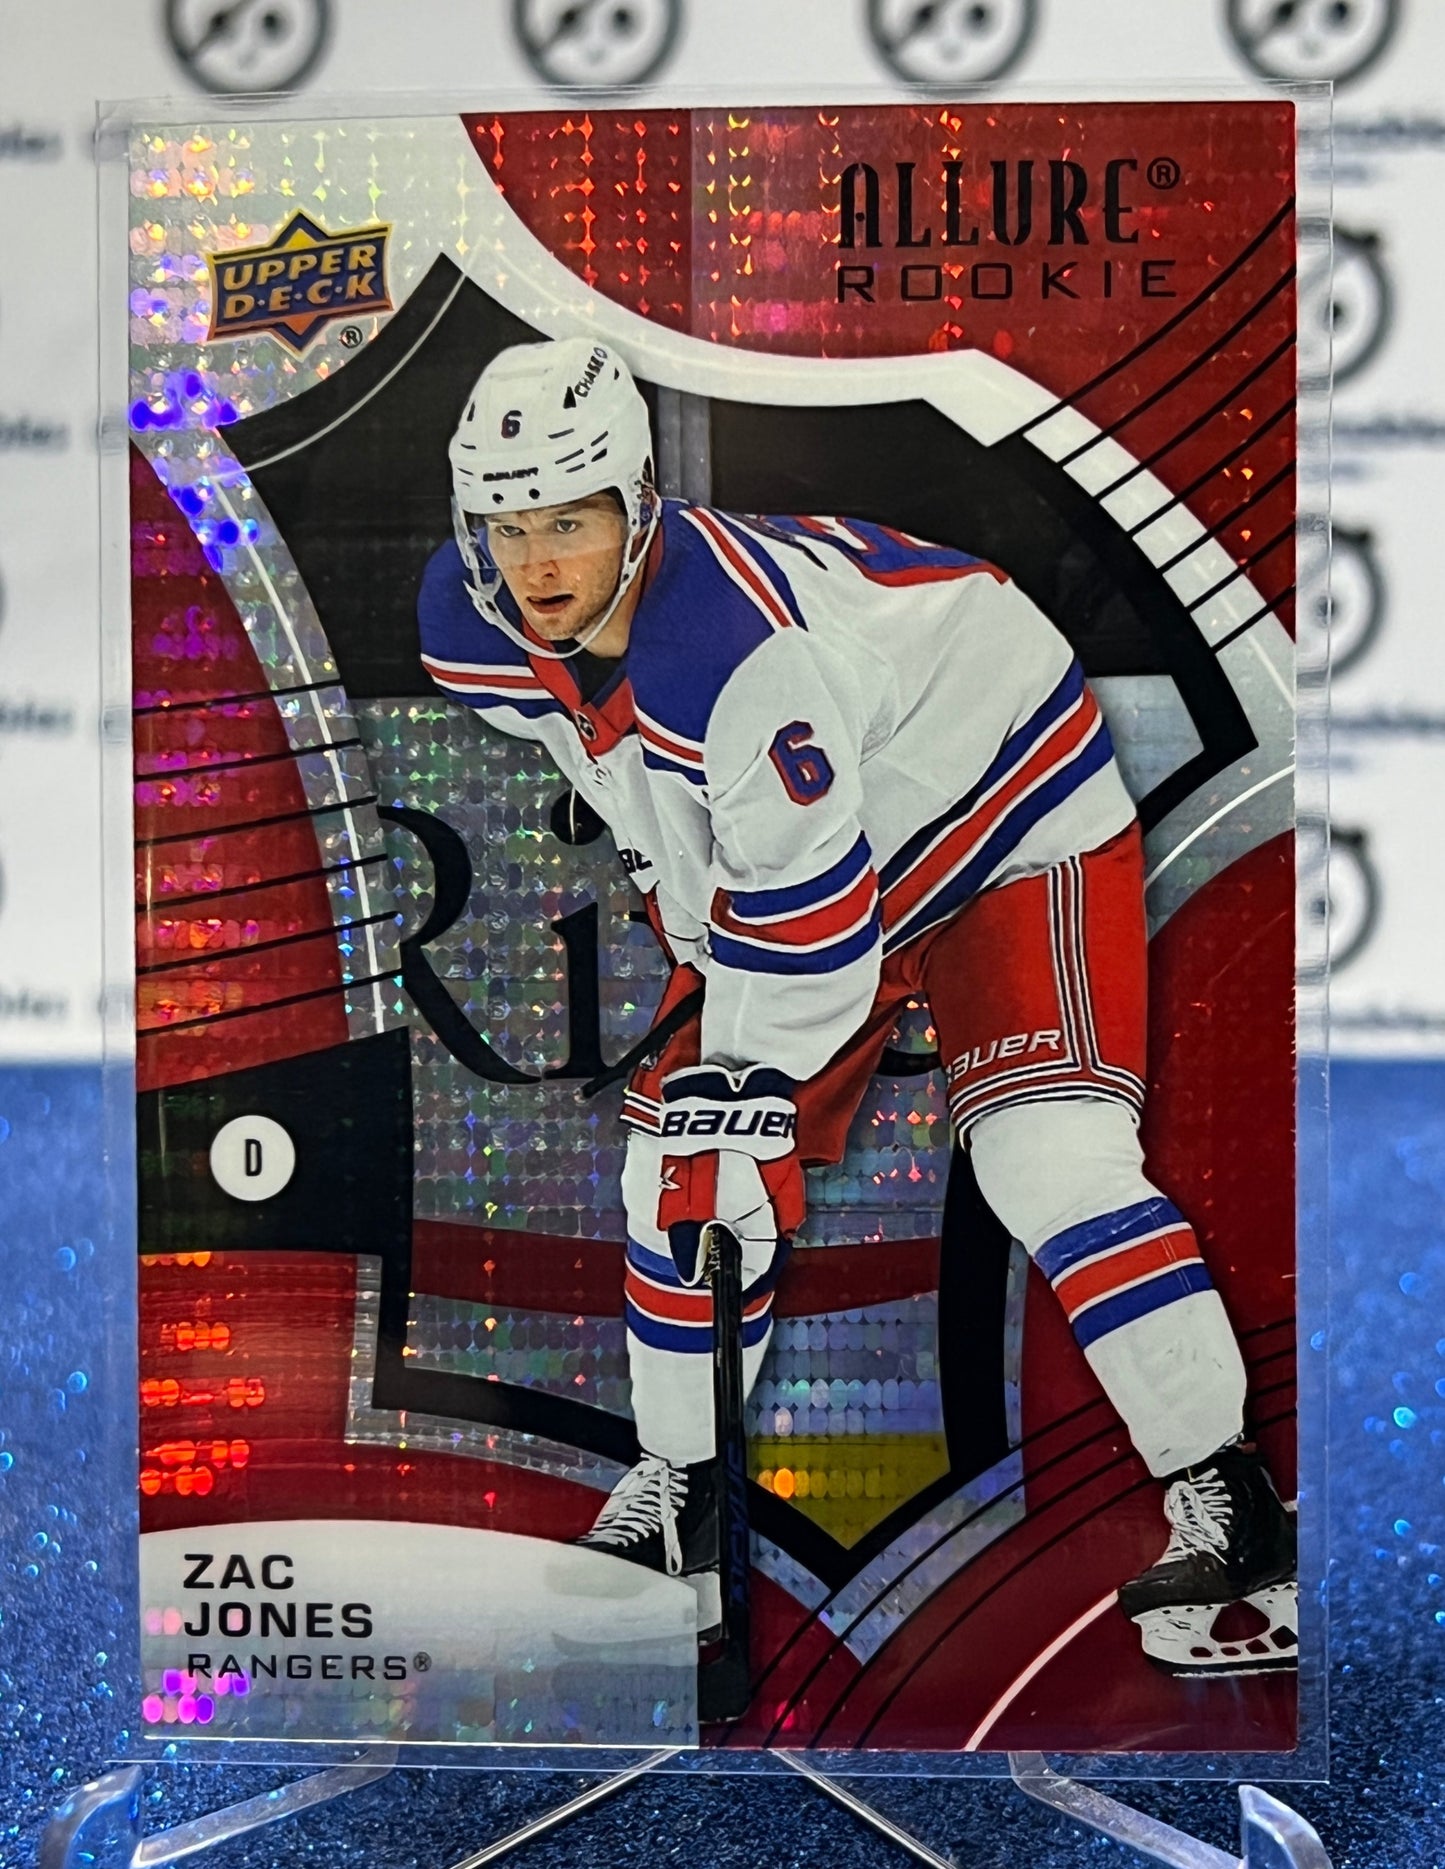 2021-22  UPPER DECK ALLURE ZAC JONES  # 139 ROOKIE RED NEW YORK RANGERS  NHL HOCKEY CARD